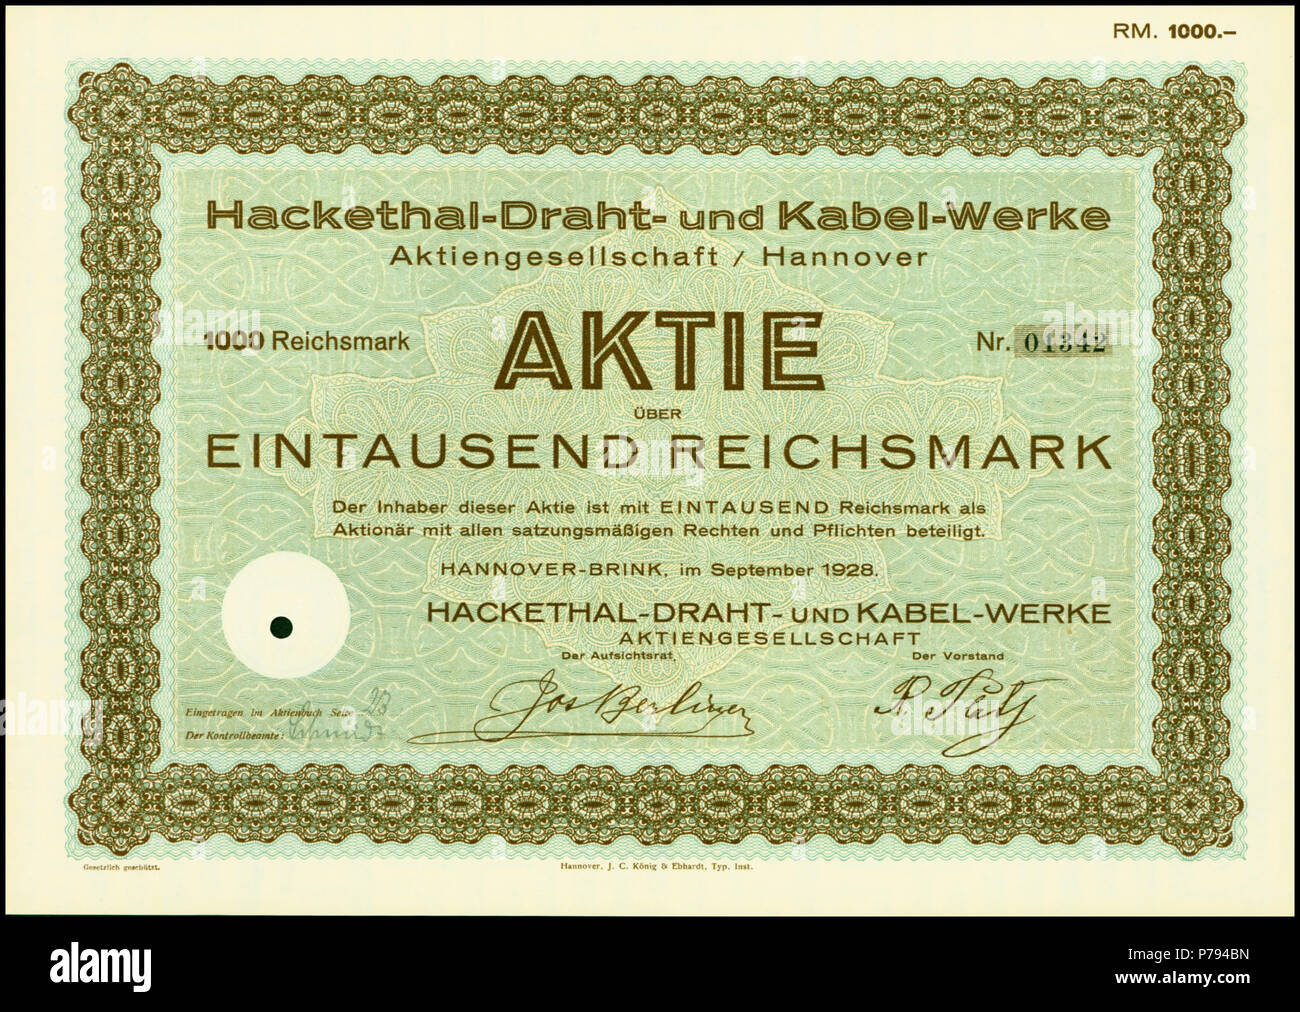 Inglese: Quota di Hackethal Draht & Kabelwerke AG, rilasciata a settembre 1928 Deutsch: Aktie über 1000 RM der Hackethal Draht & Kabelwerke AG vom Settembre 1928 . 1 Settembre 1928 3 Hackethal-Draht- und Kabel-Werke AG 1928 Foto Stock